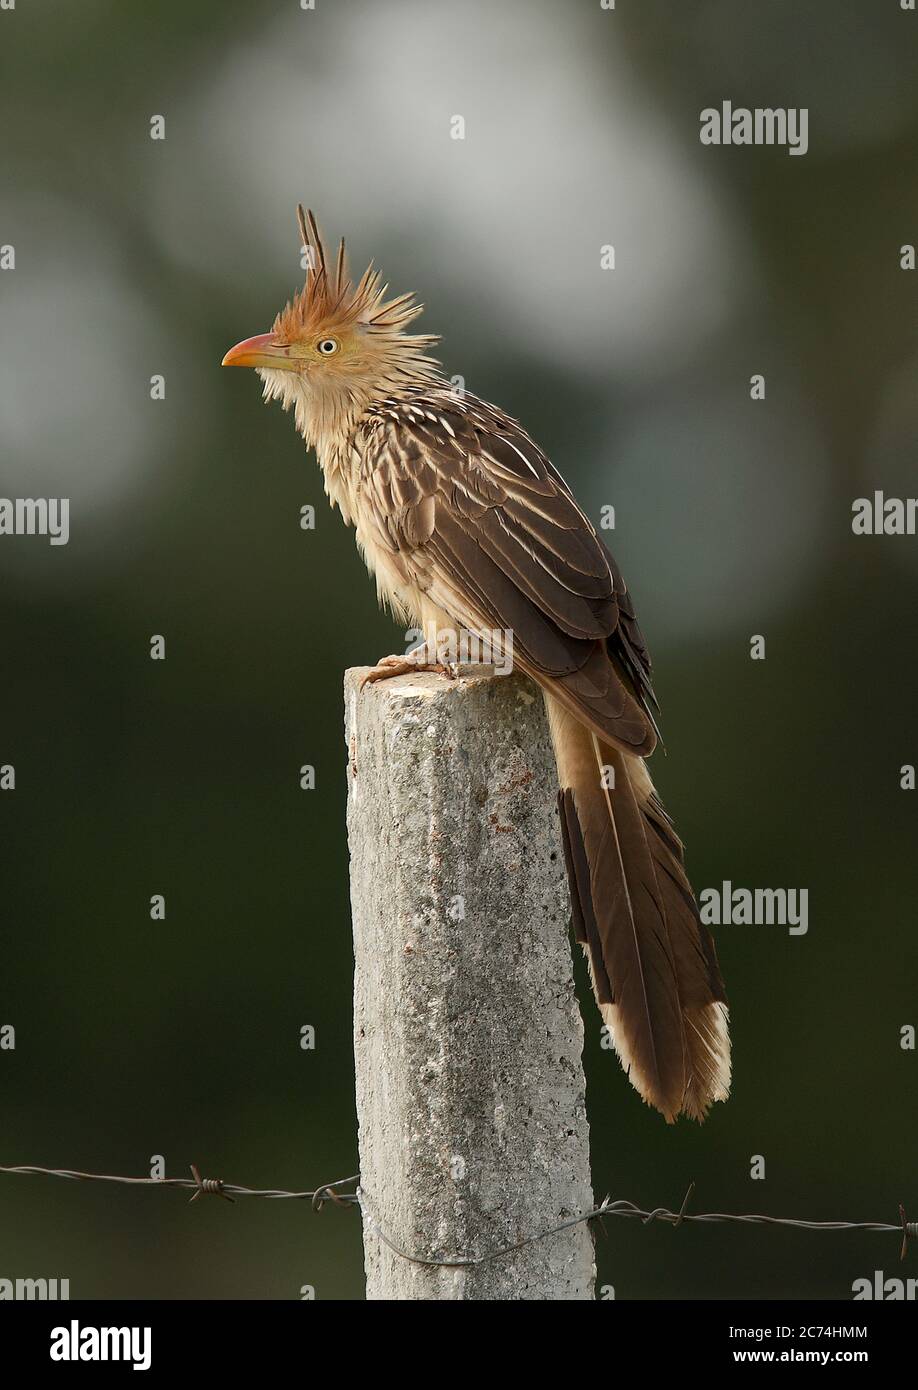 guira cuckoo (Guira guira), adult perched on a pole, Brazil Stock Photo